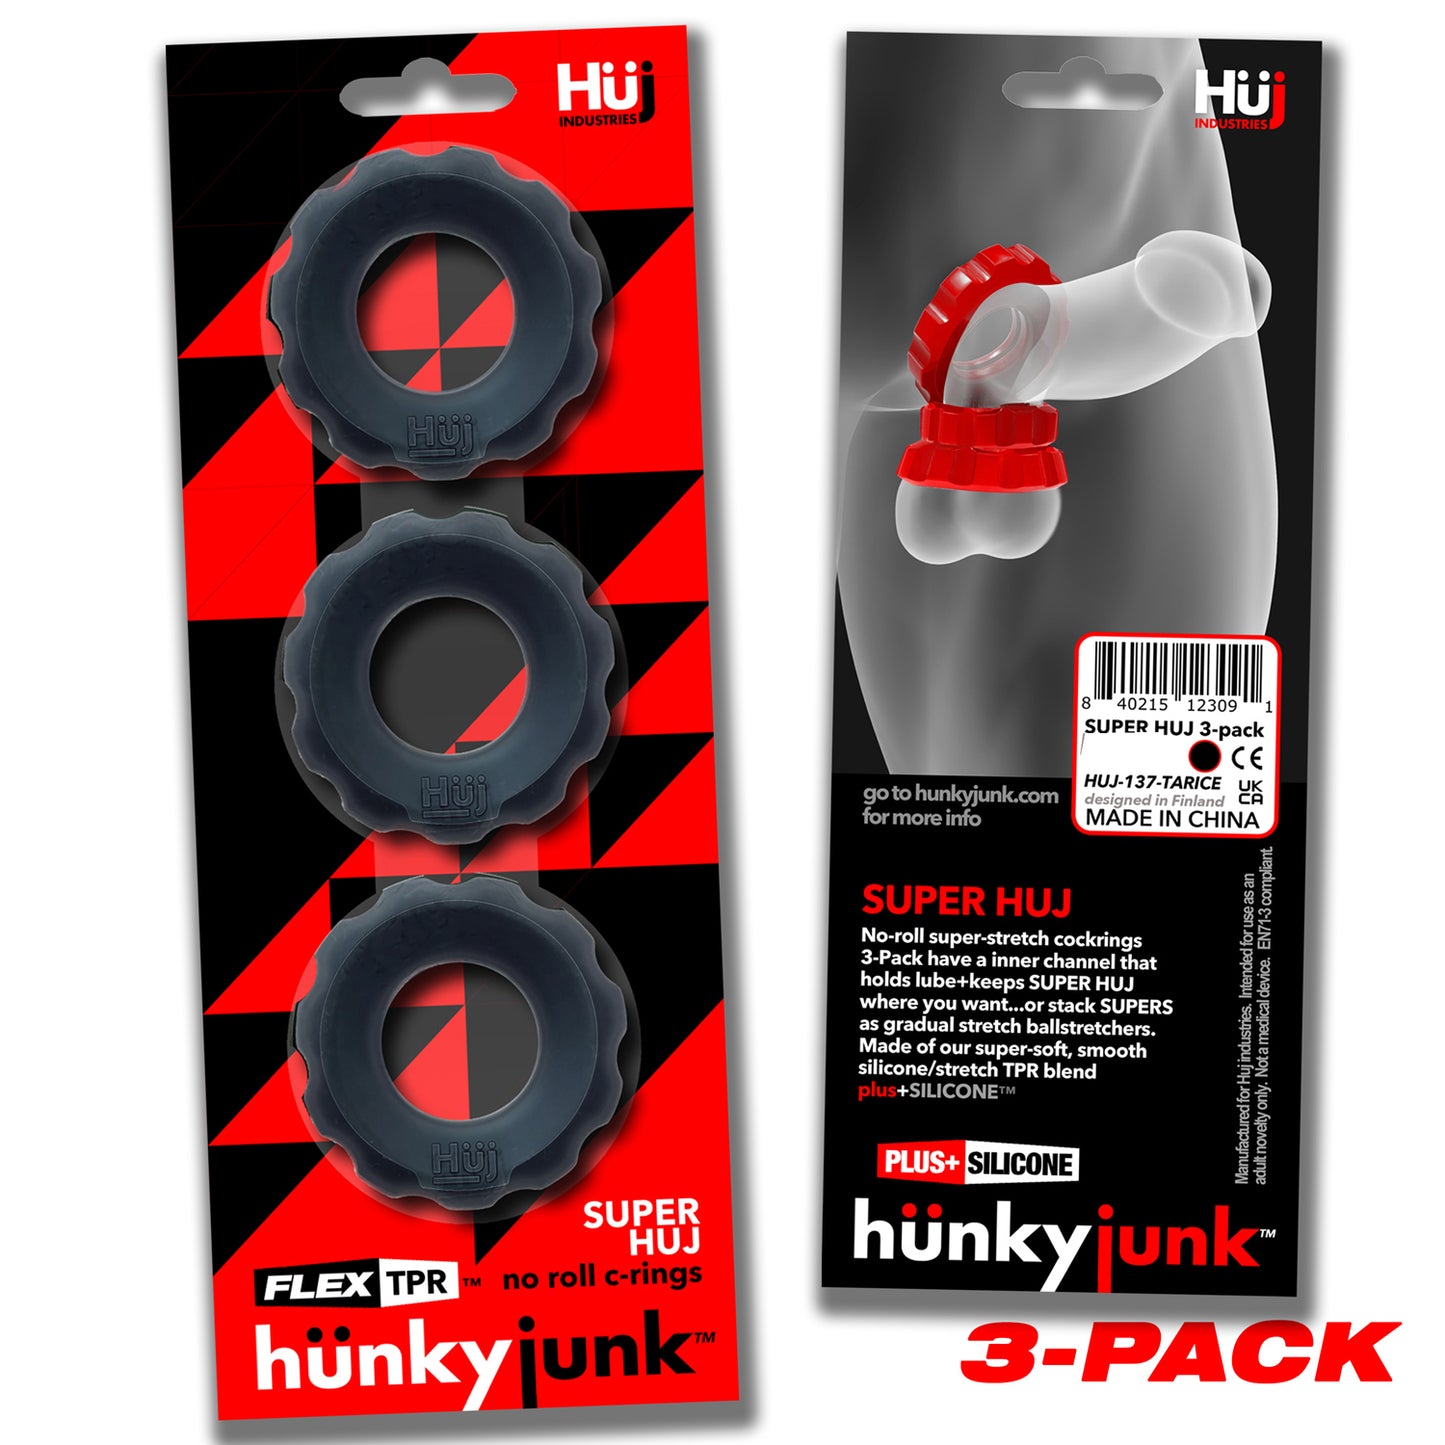 Super Huj - 3-Pack Cockrings - Tar Ice